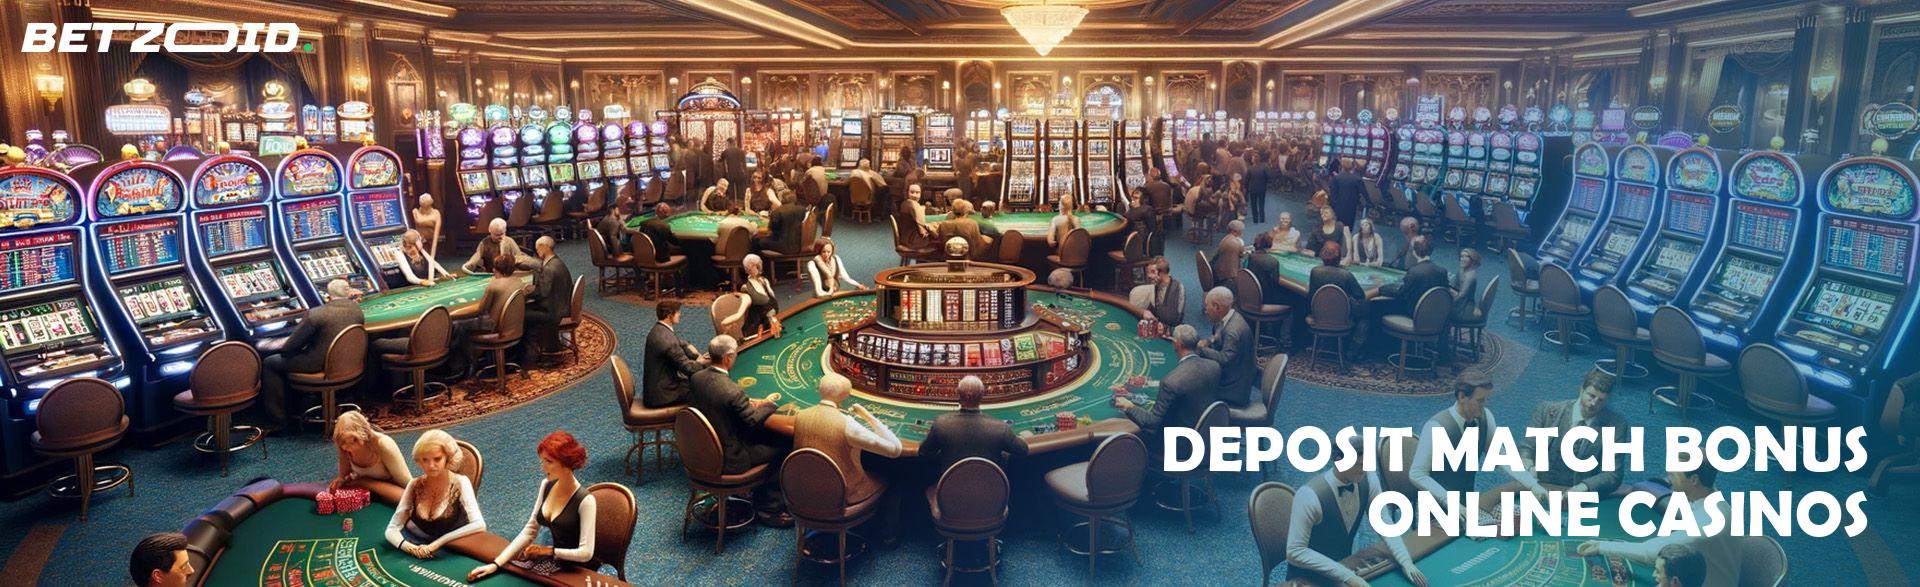 Deposit Match Bonus Online Casinos.